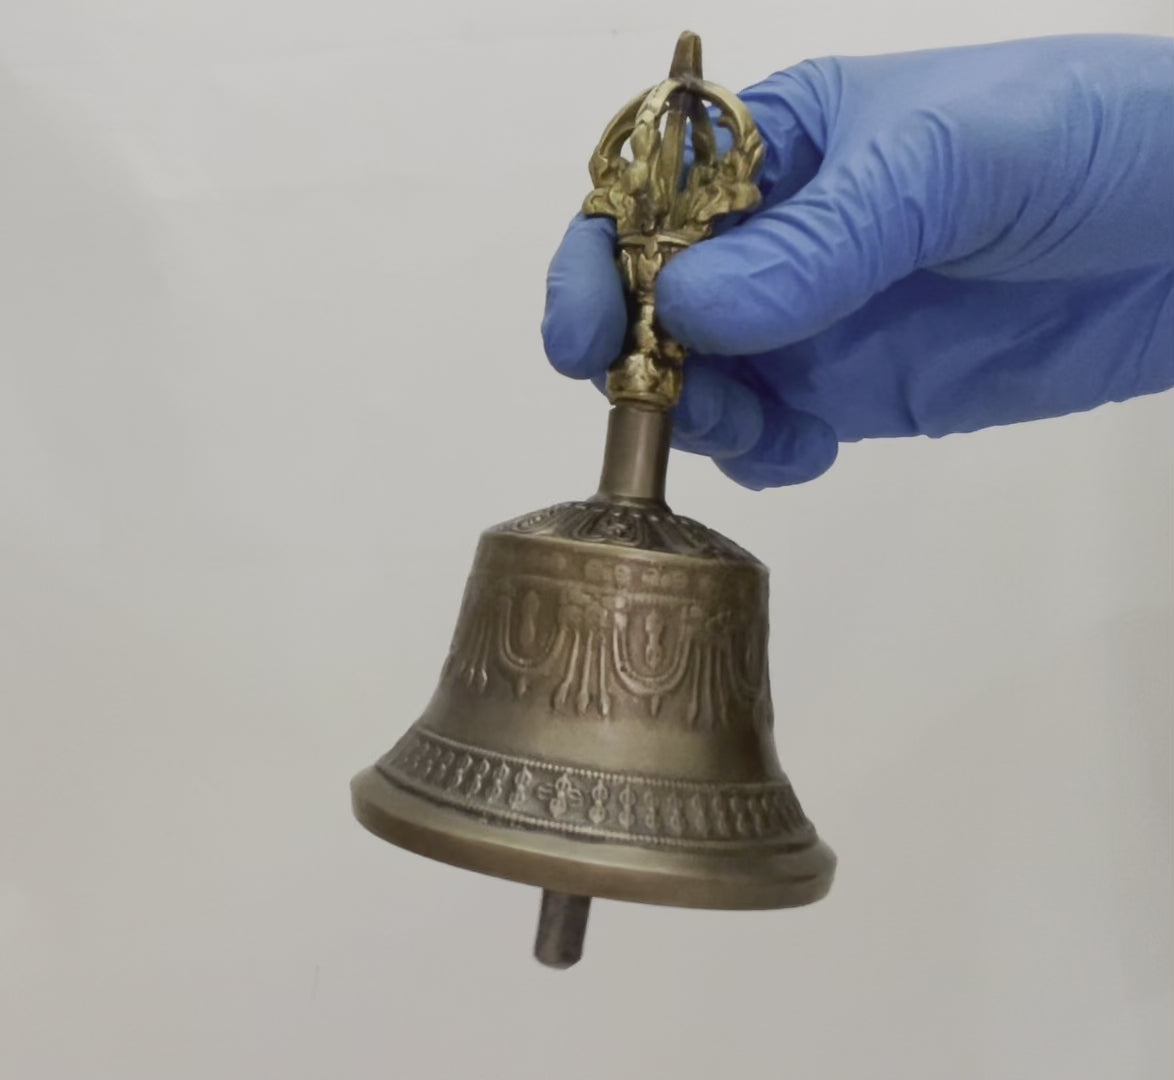 6" Bell ringing